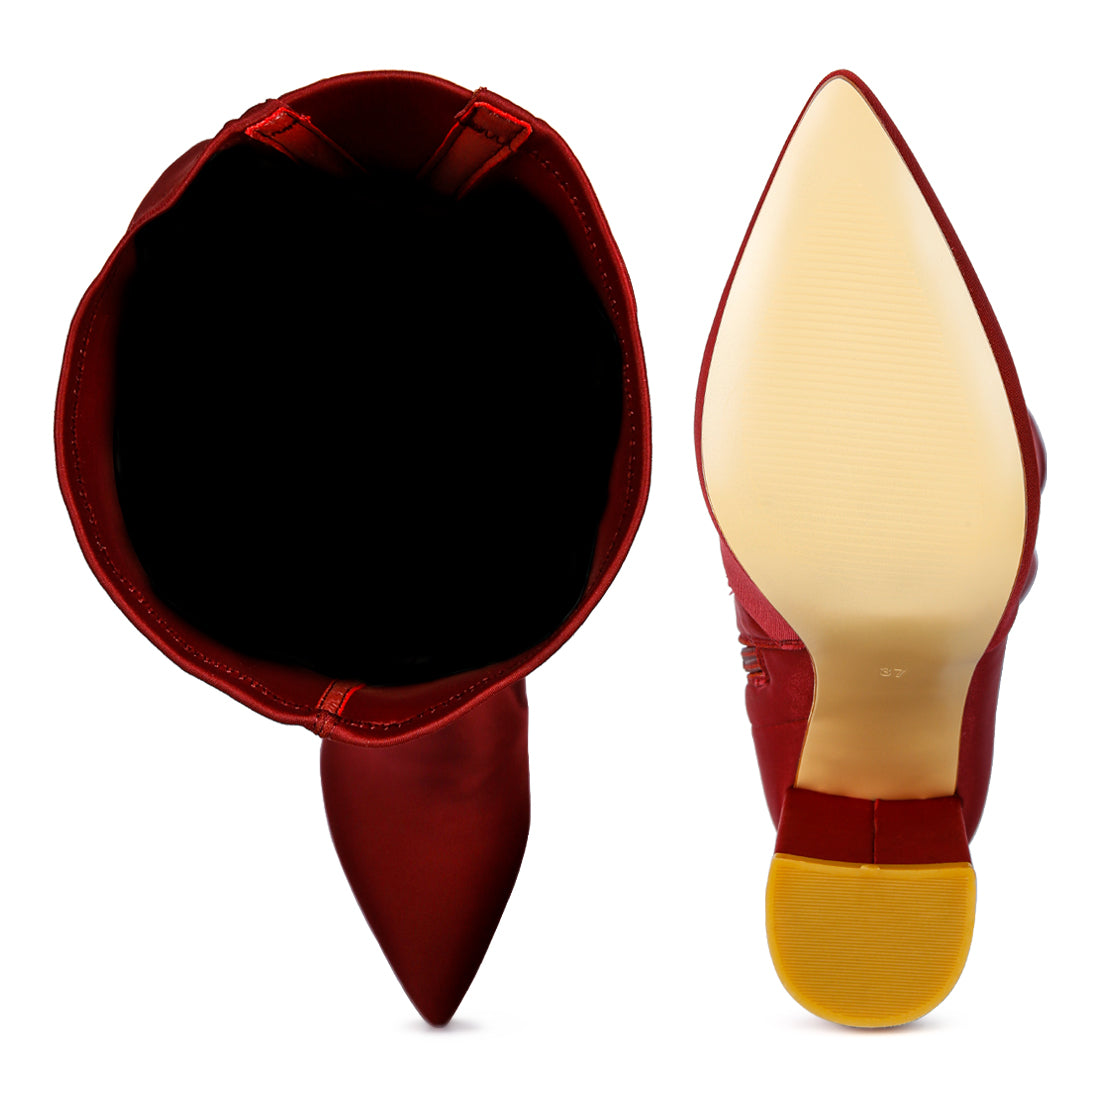 high block heeled long boot#color_burgundy